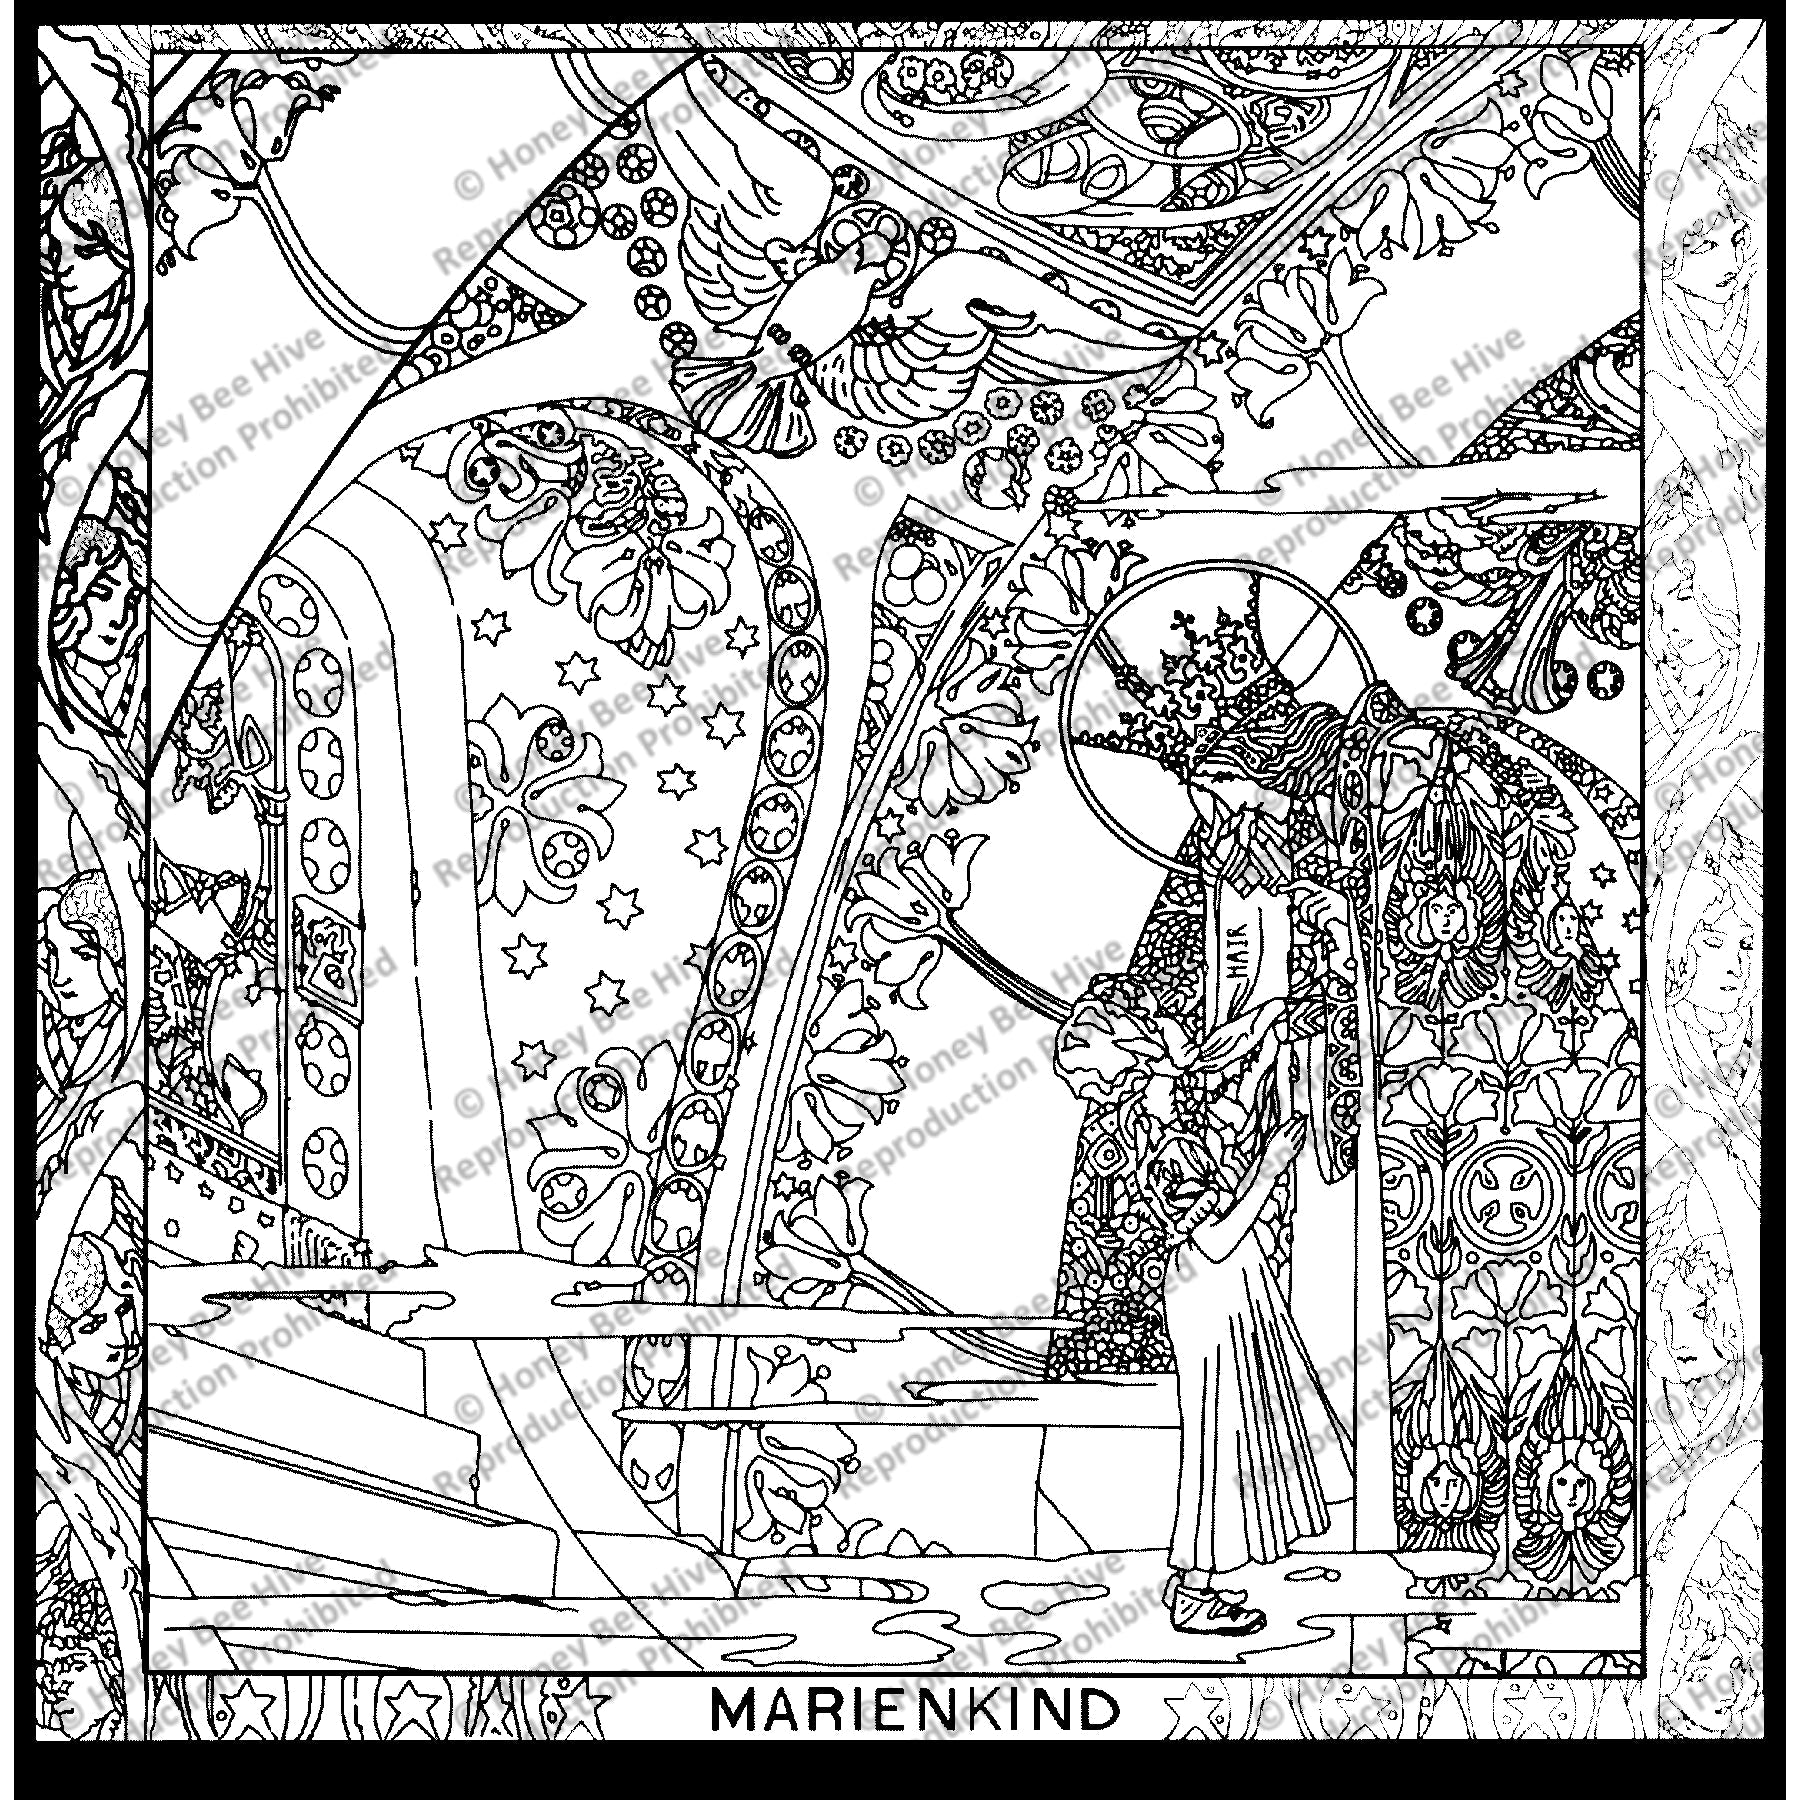 Marienkind, Ill. Henrich Lefler, 1904., rug hooking pattern